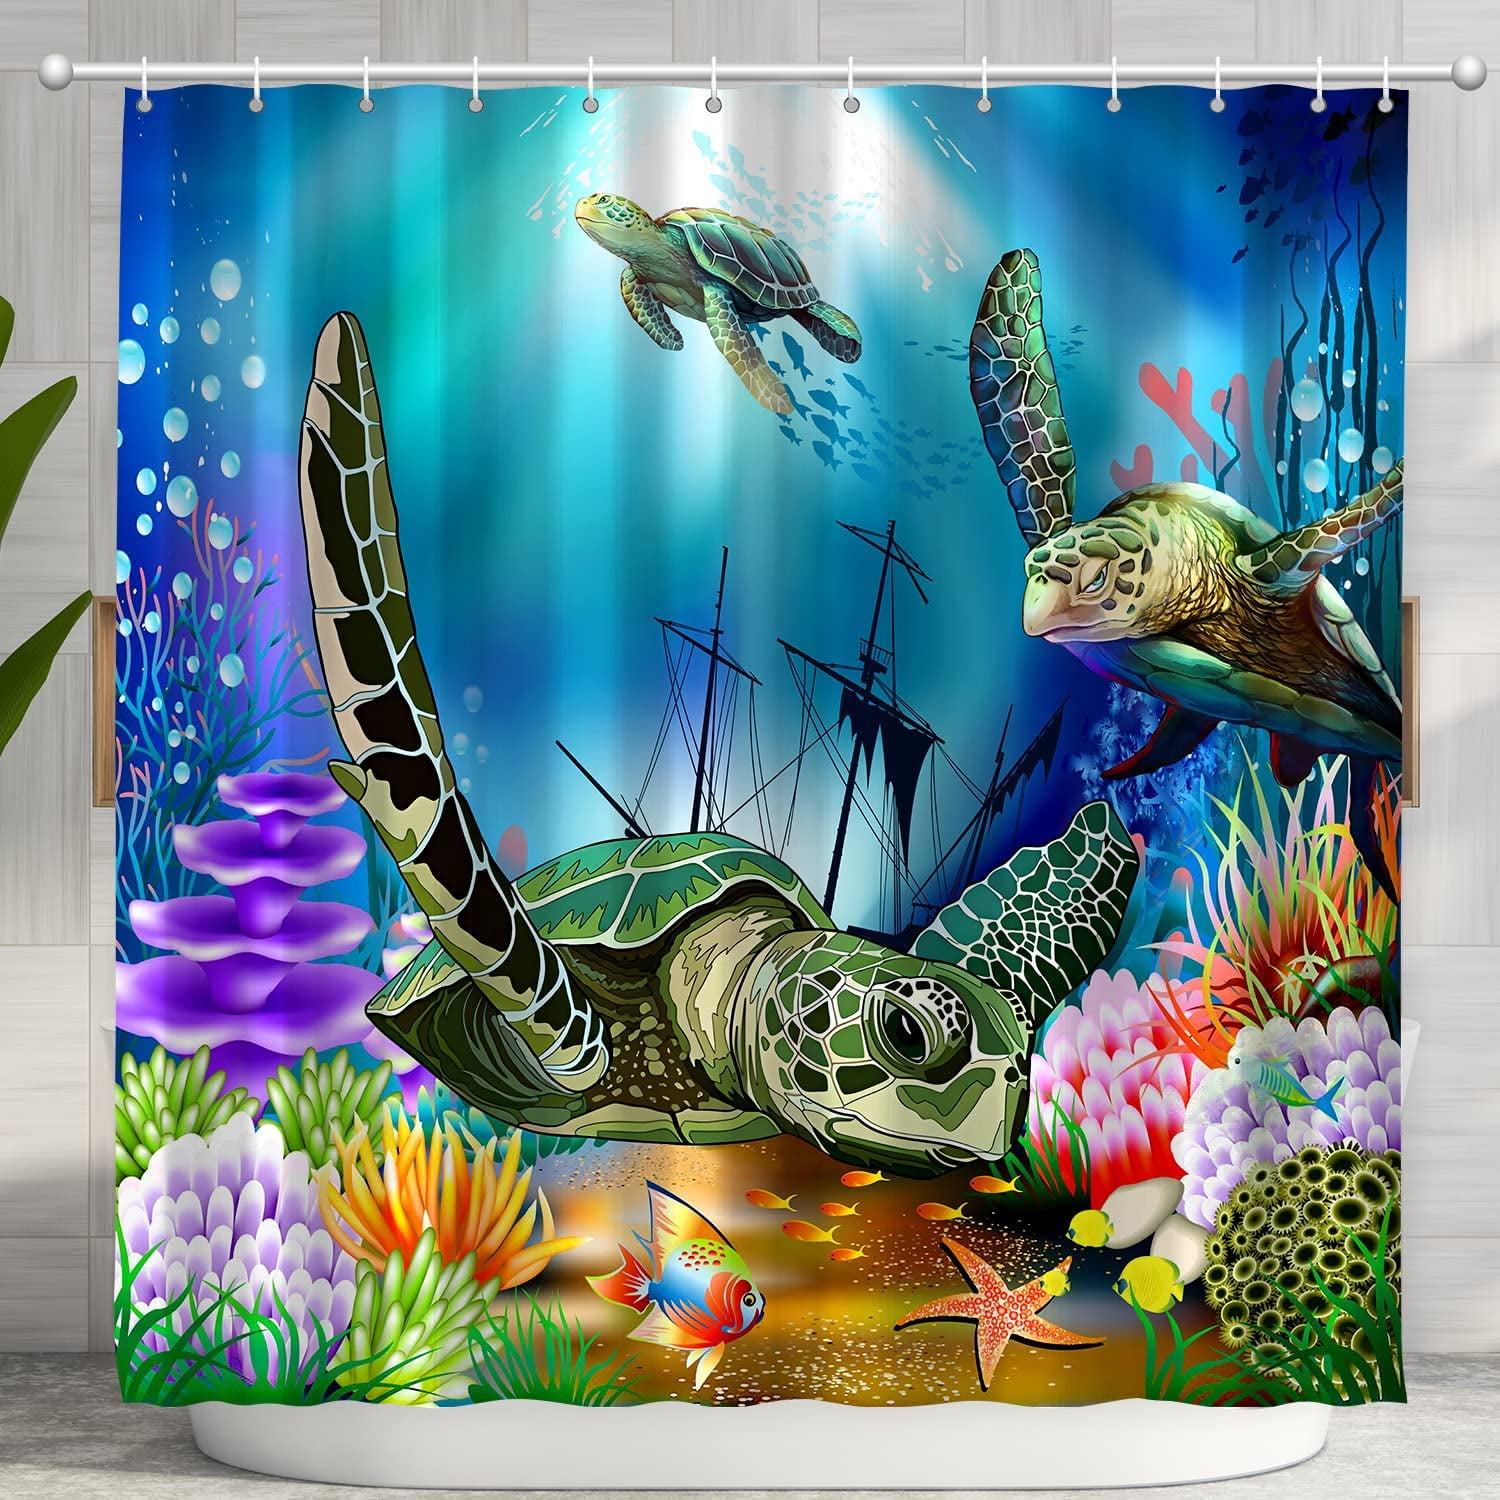 Green Sea Turtles Shower Curtain Sets Bathroom Blue Ocean Beach Home  Bathtub Decor with 12 Hooks Washable Durable Polyester Fabric 72x72